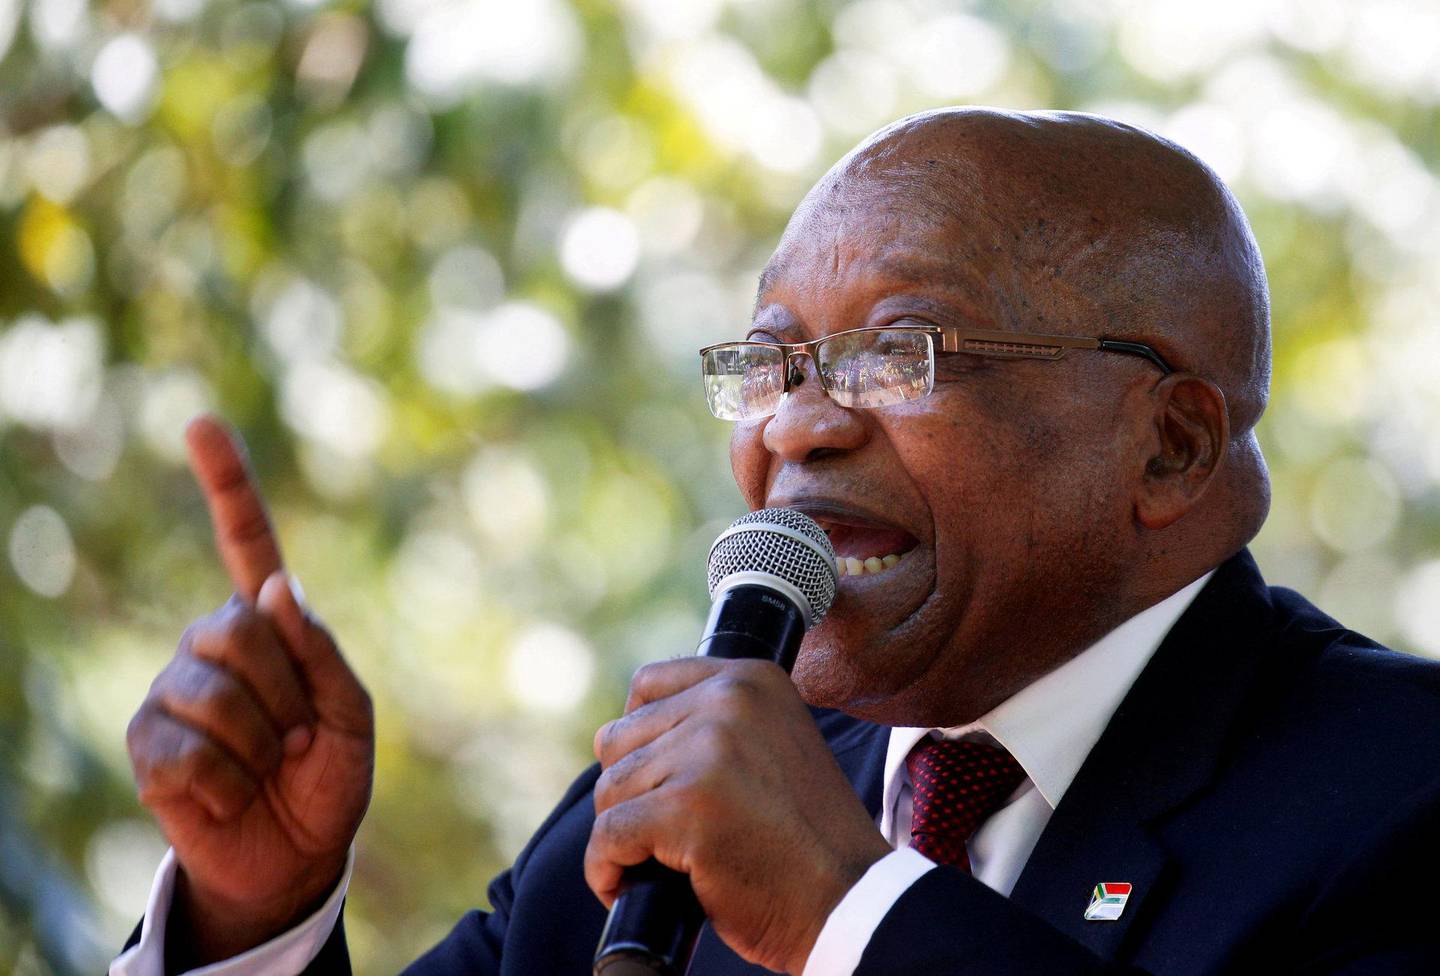 BLE BYTTET UT: Jacob Zuma. FOTO: NTB SCANPIX